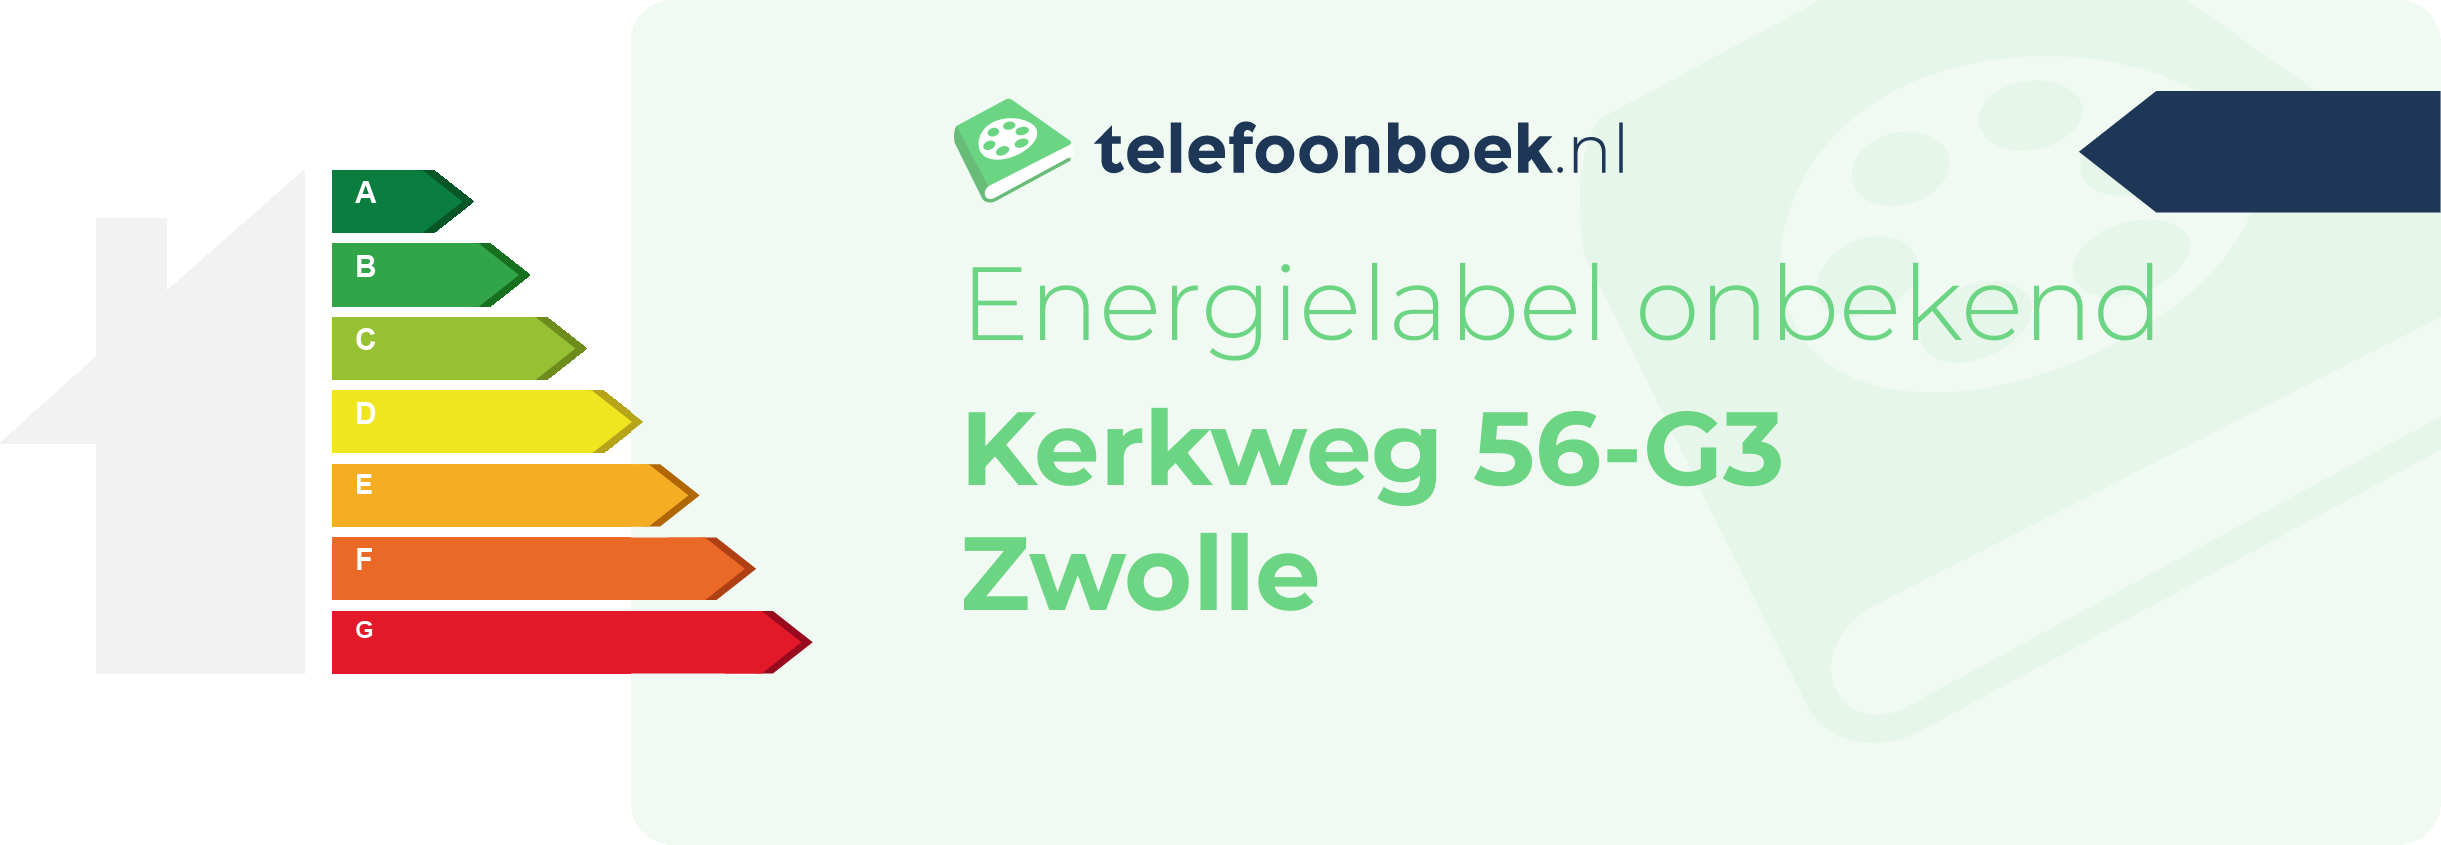 Energielabel Kerkweg 56-G3 Zwolle